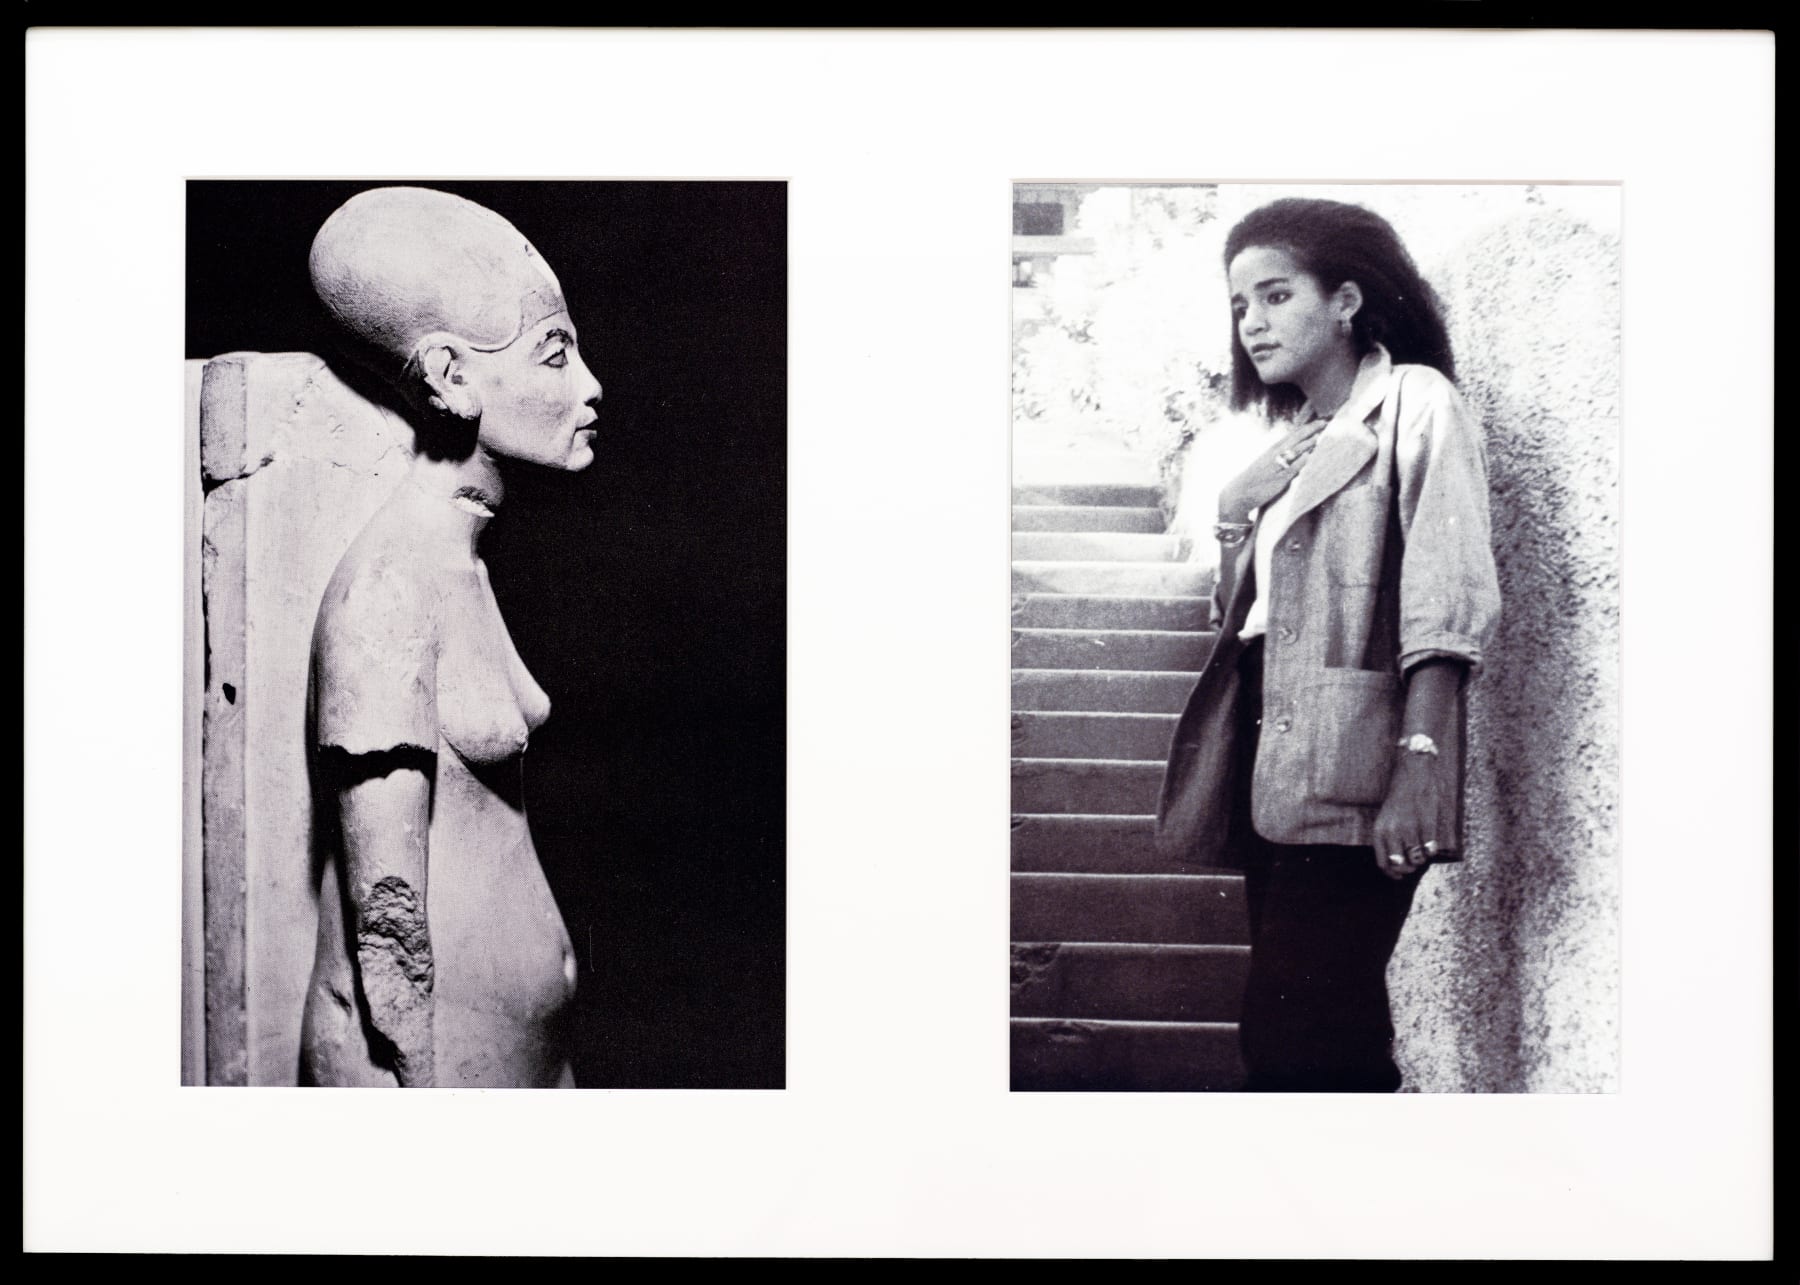 Lorraine O'Grady, Miscegenated Family Album (Cross Generational), L: Nefertiti, the last image; R: Devonia's youngest daughter, Kimberley, 1980/1994